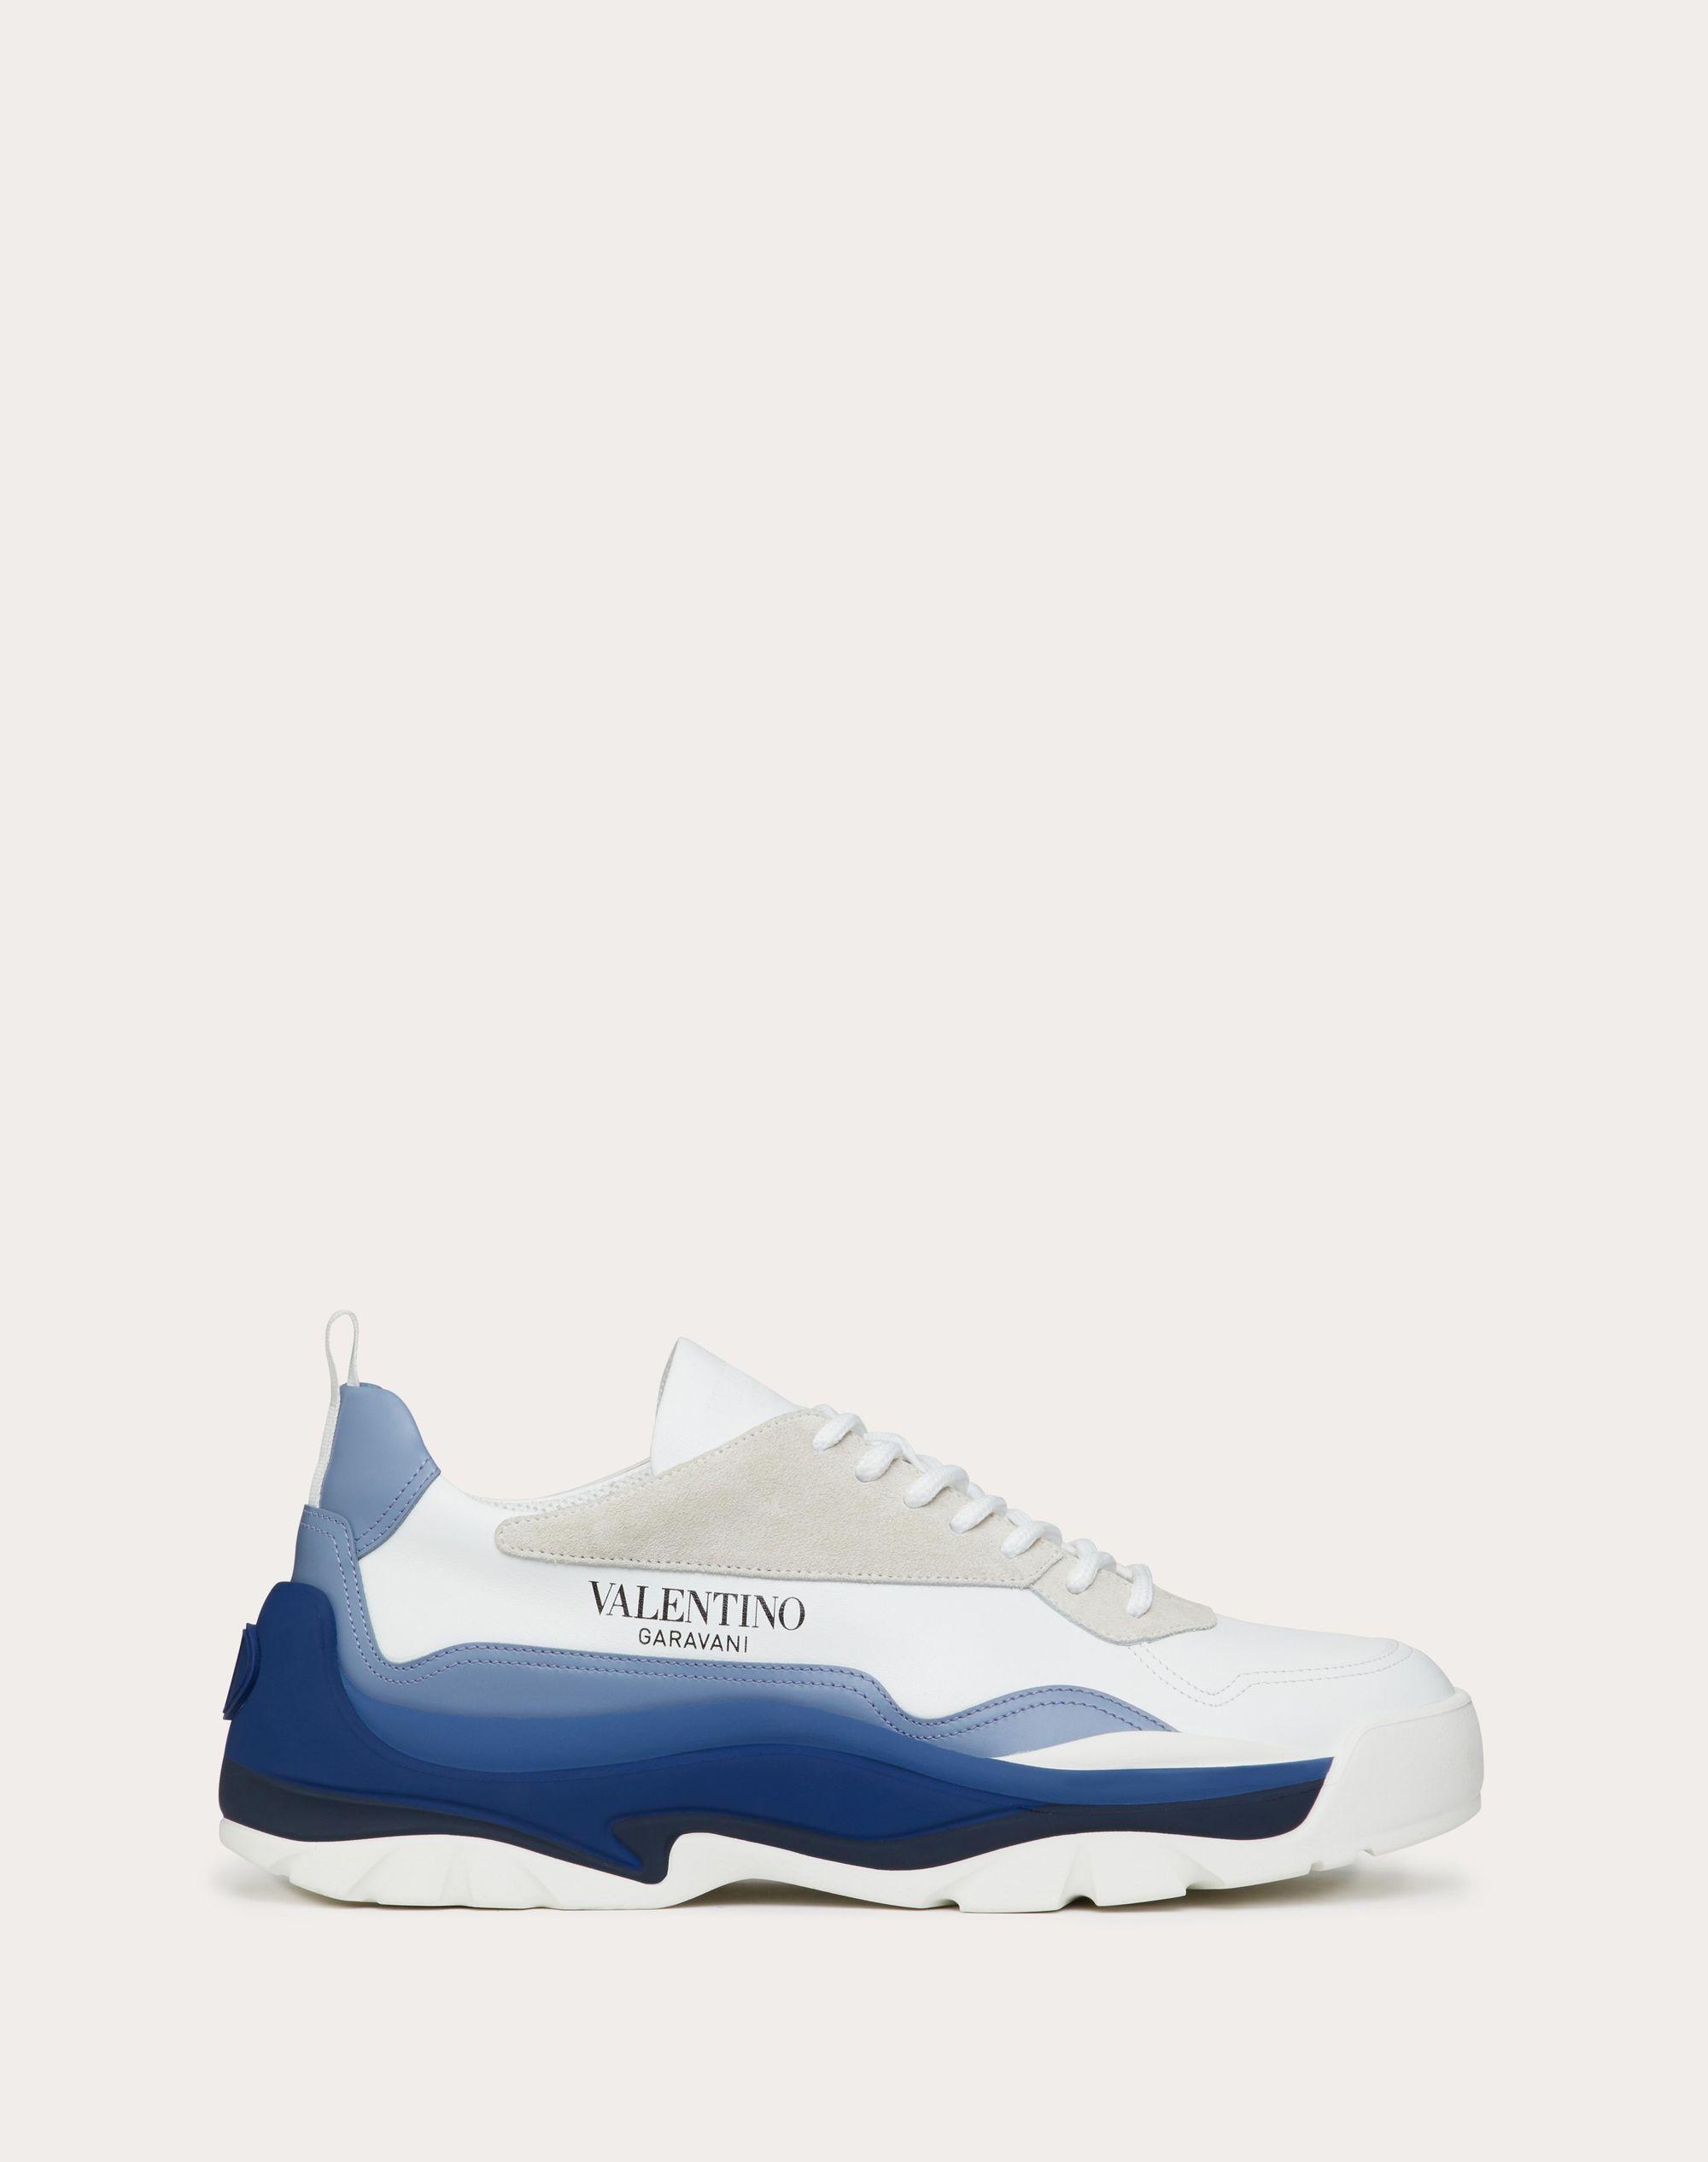 Valentino Garavani Gumboy Sneaker In Calfskin in White for Men | Lyst